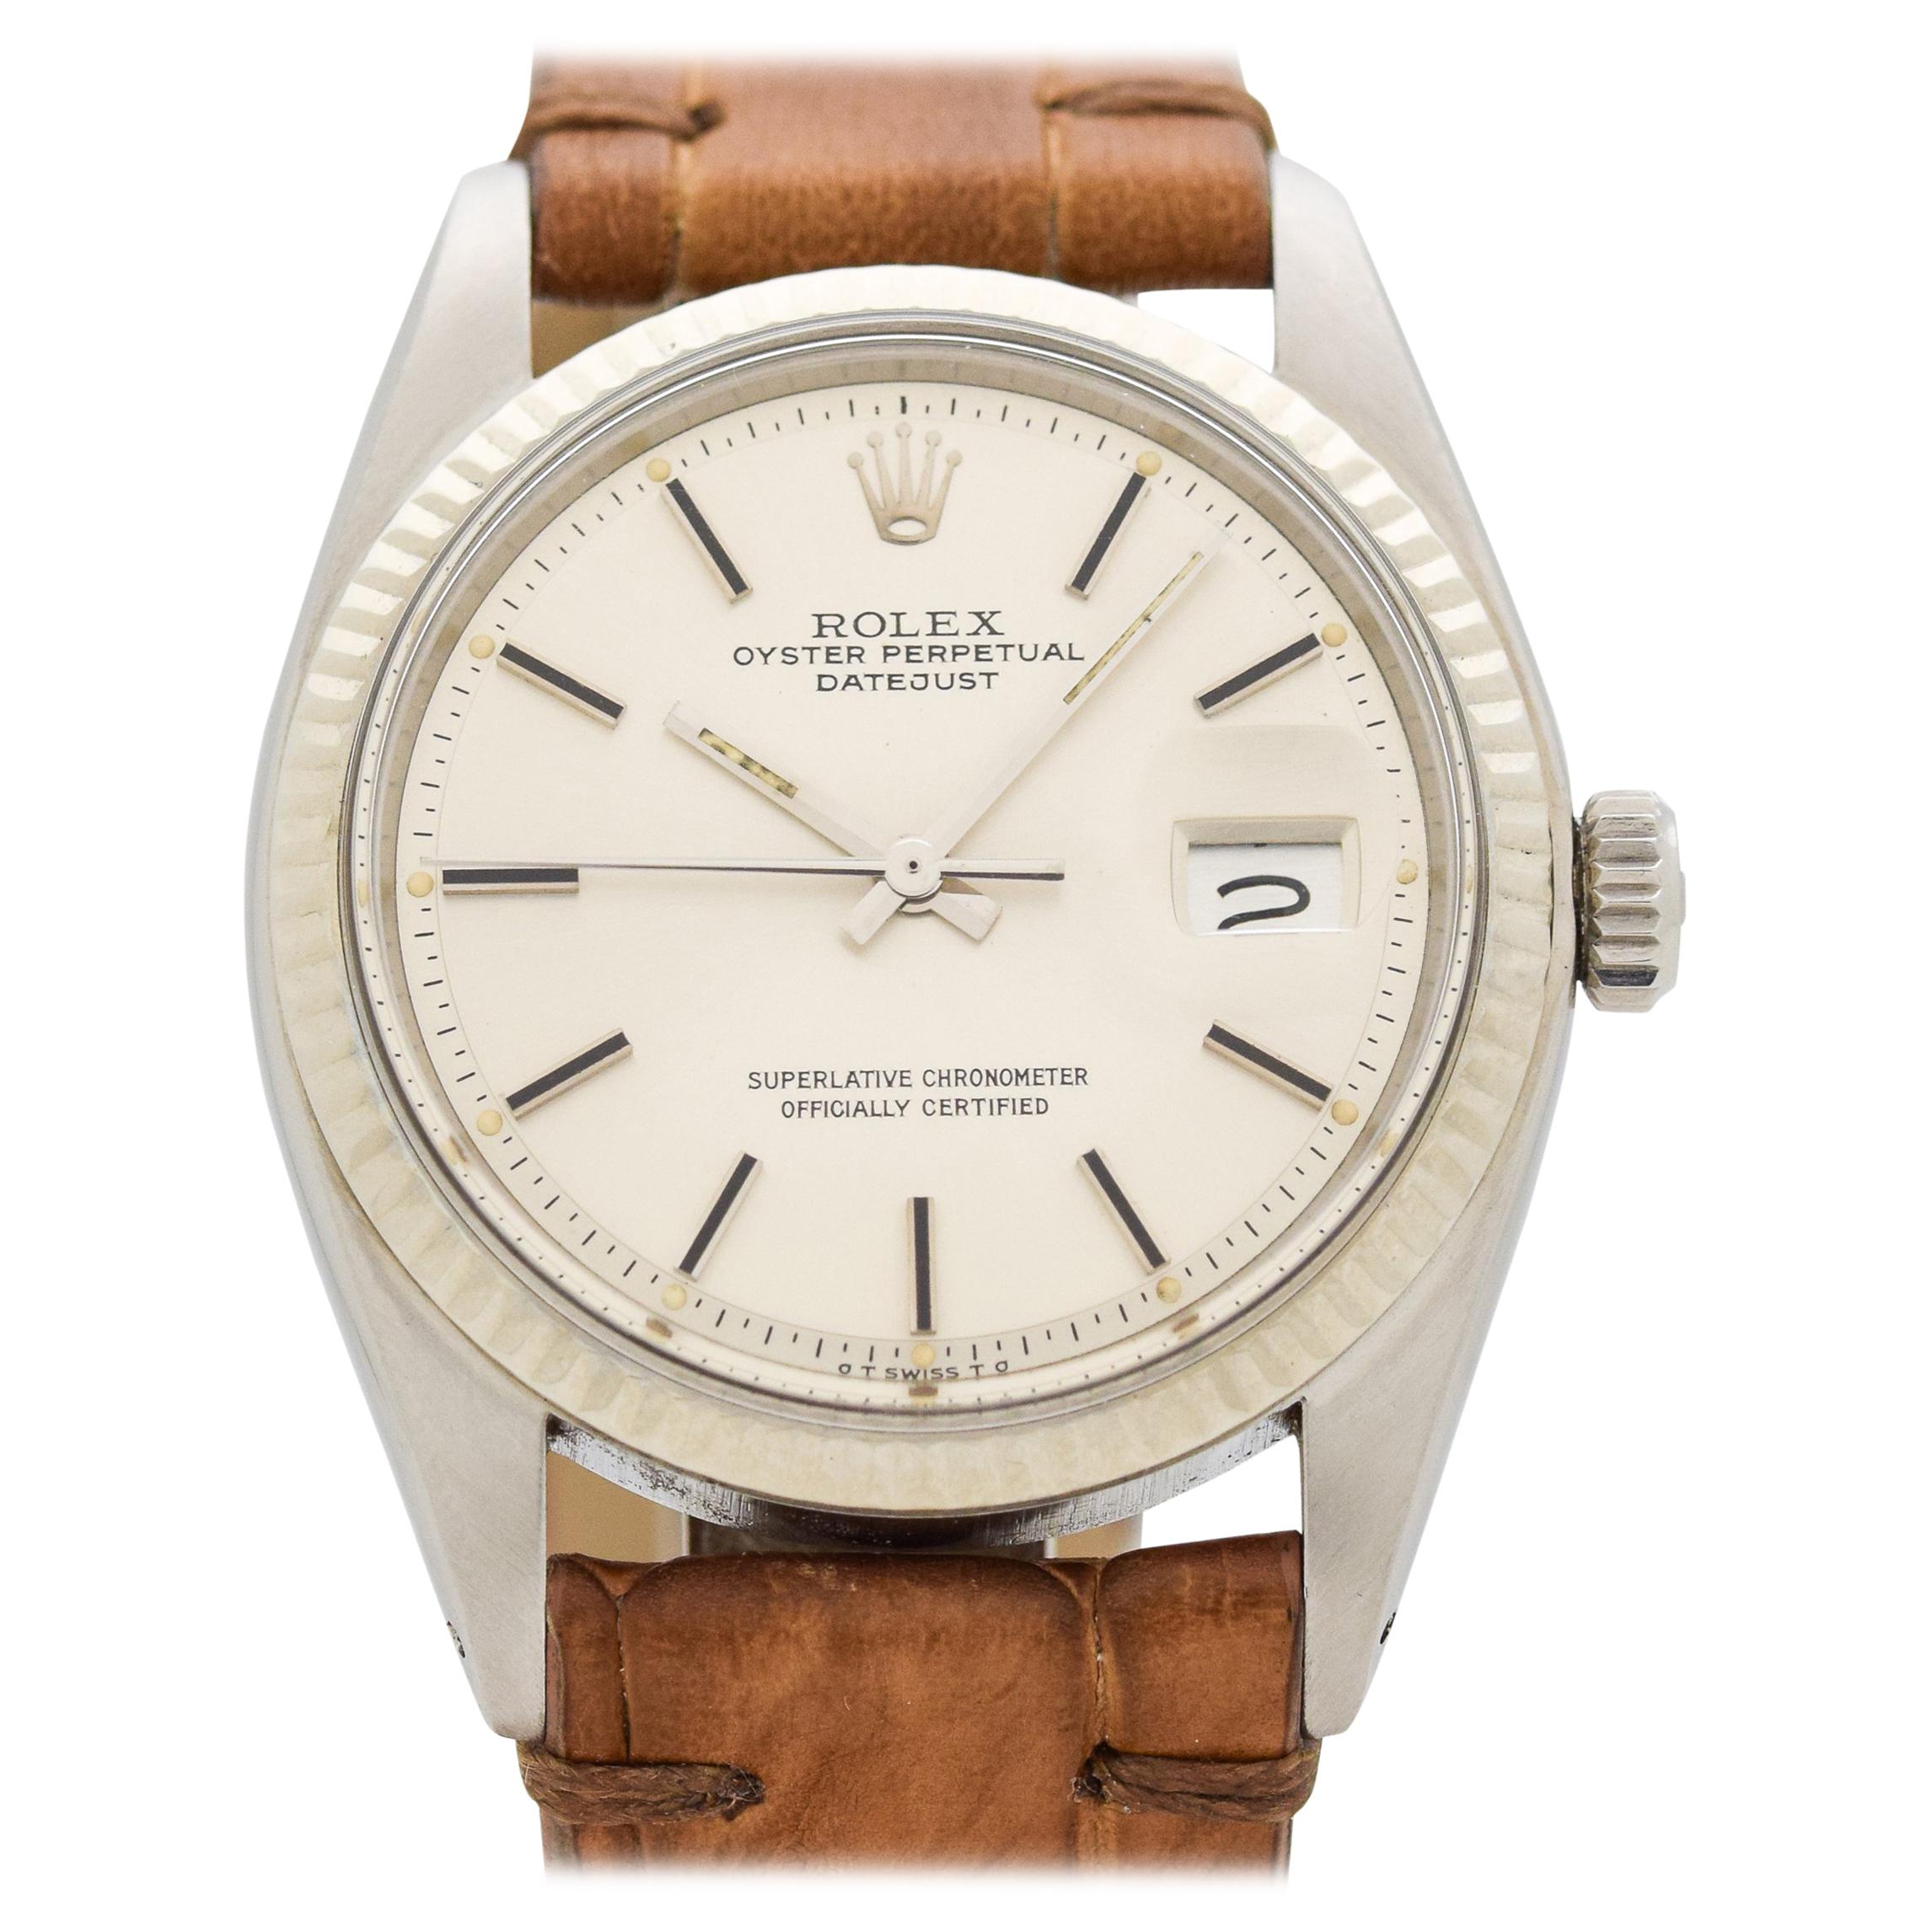 Vintage Rolex Datejust Reference 1601 Watch, 1977